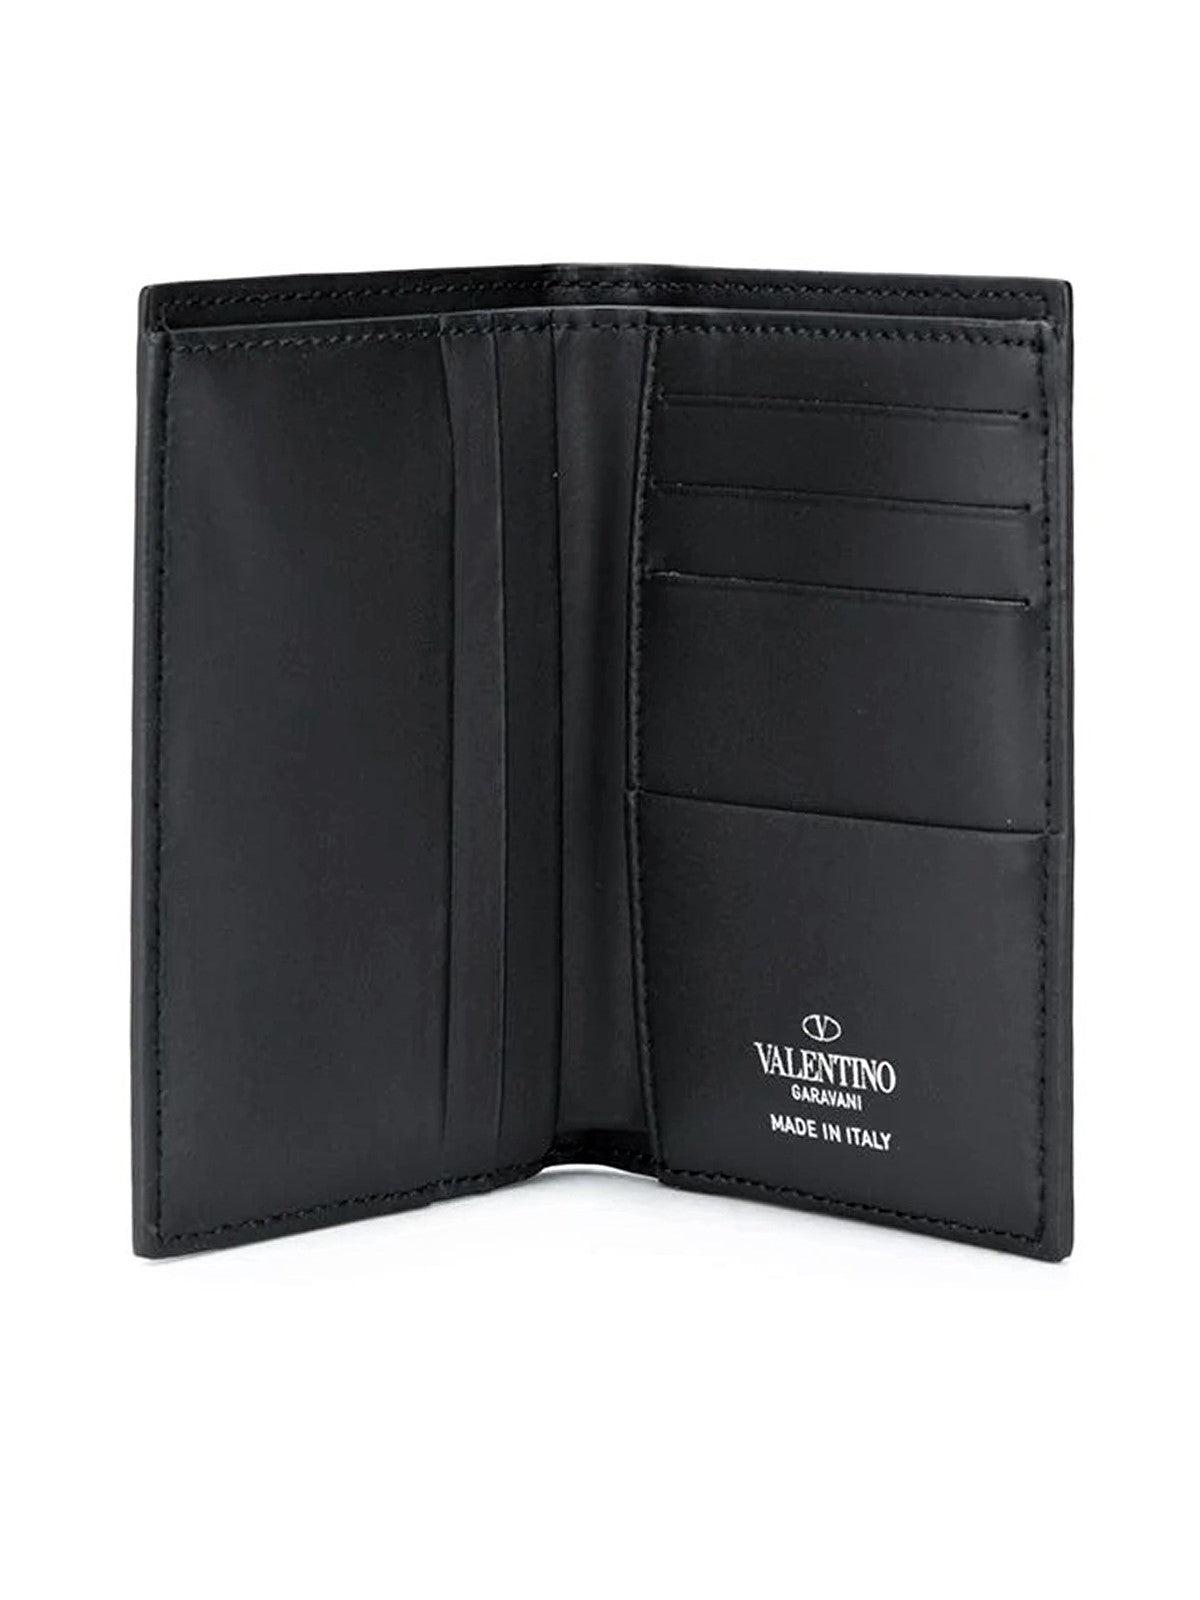 Valentino Leather Vltn Times Bifold Wallet in Black for Men - Lyst